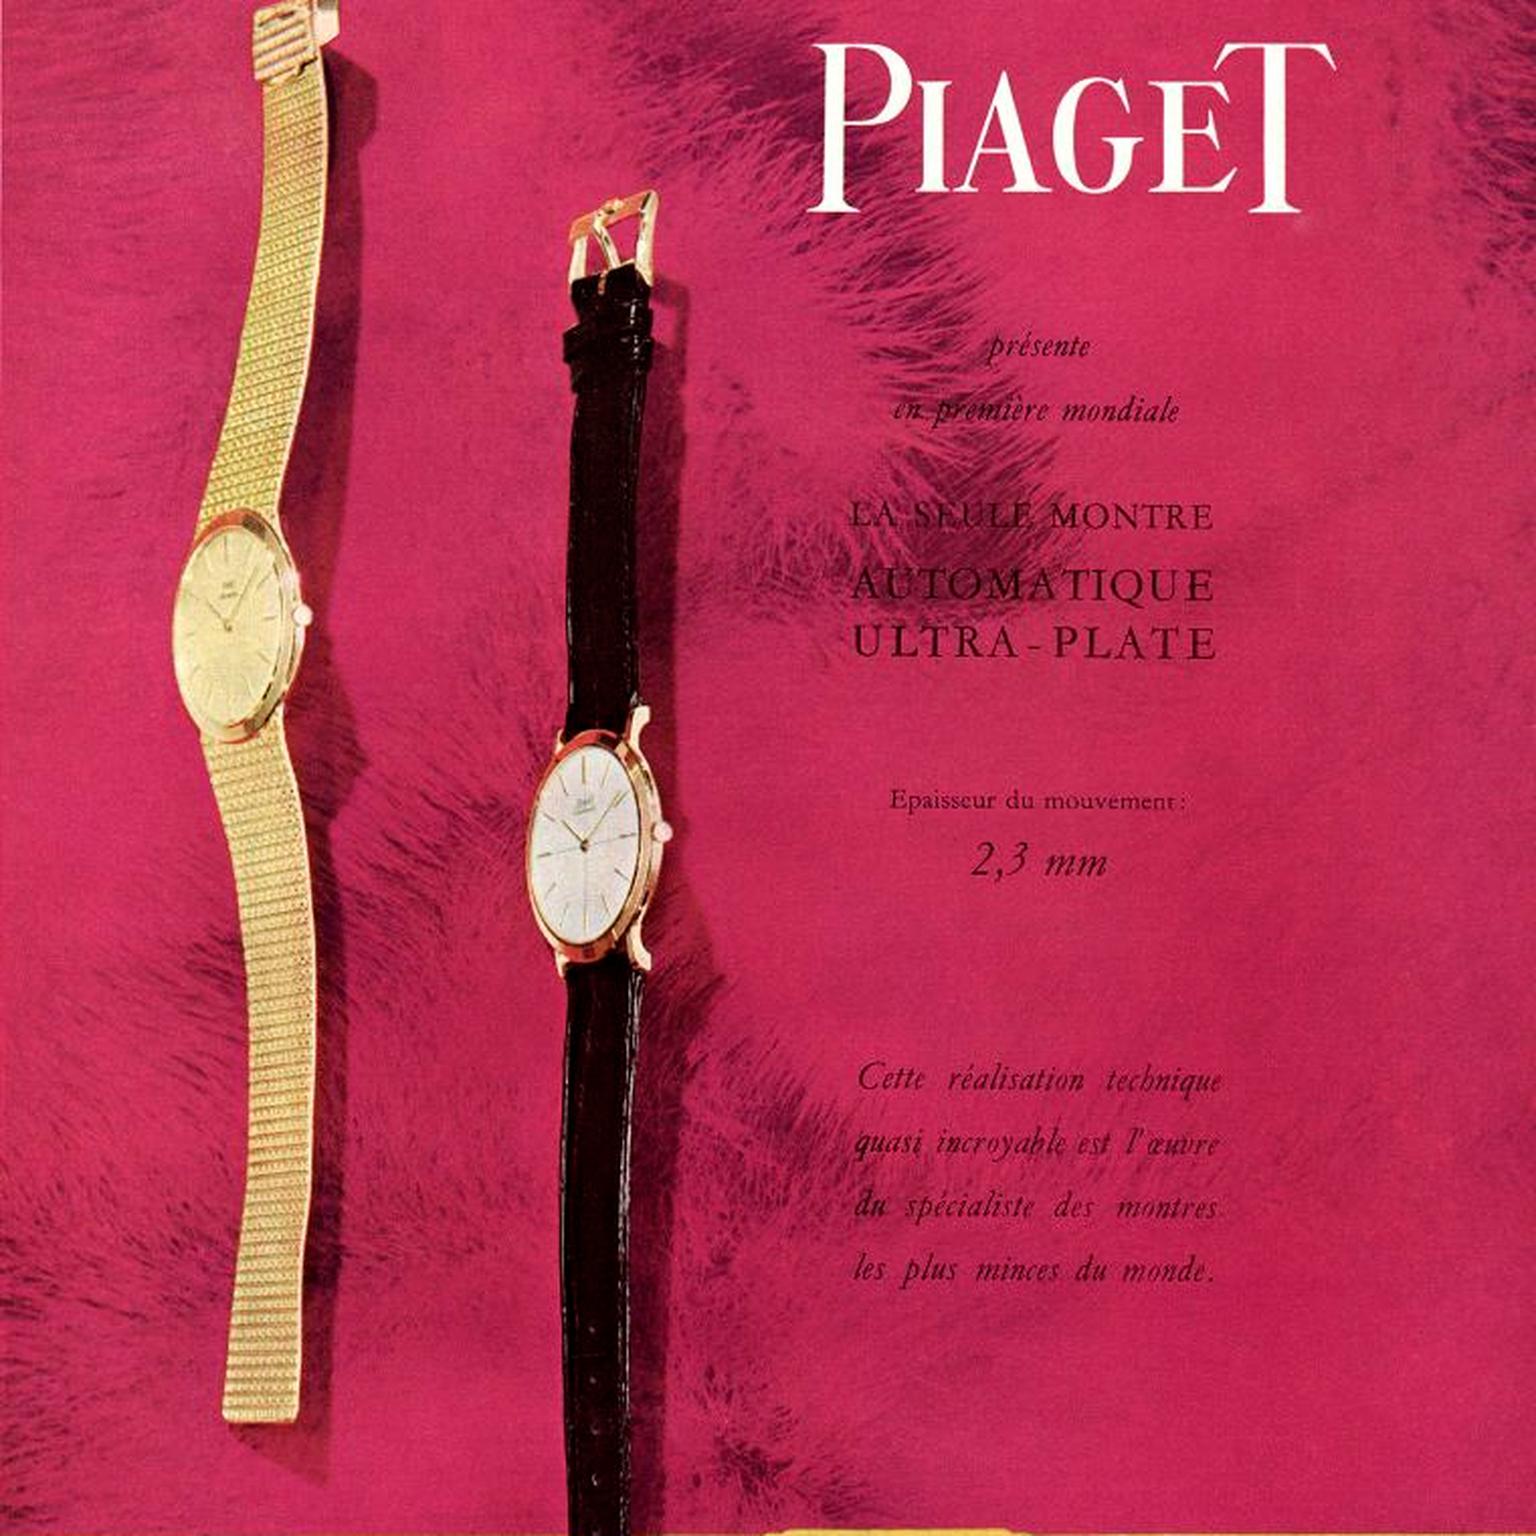 1960's Piaget Advert